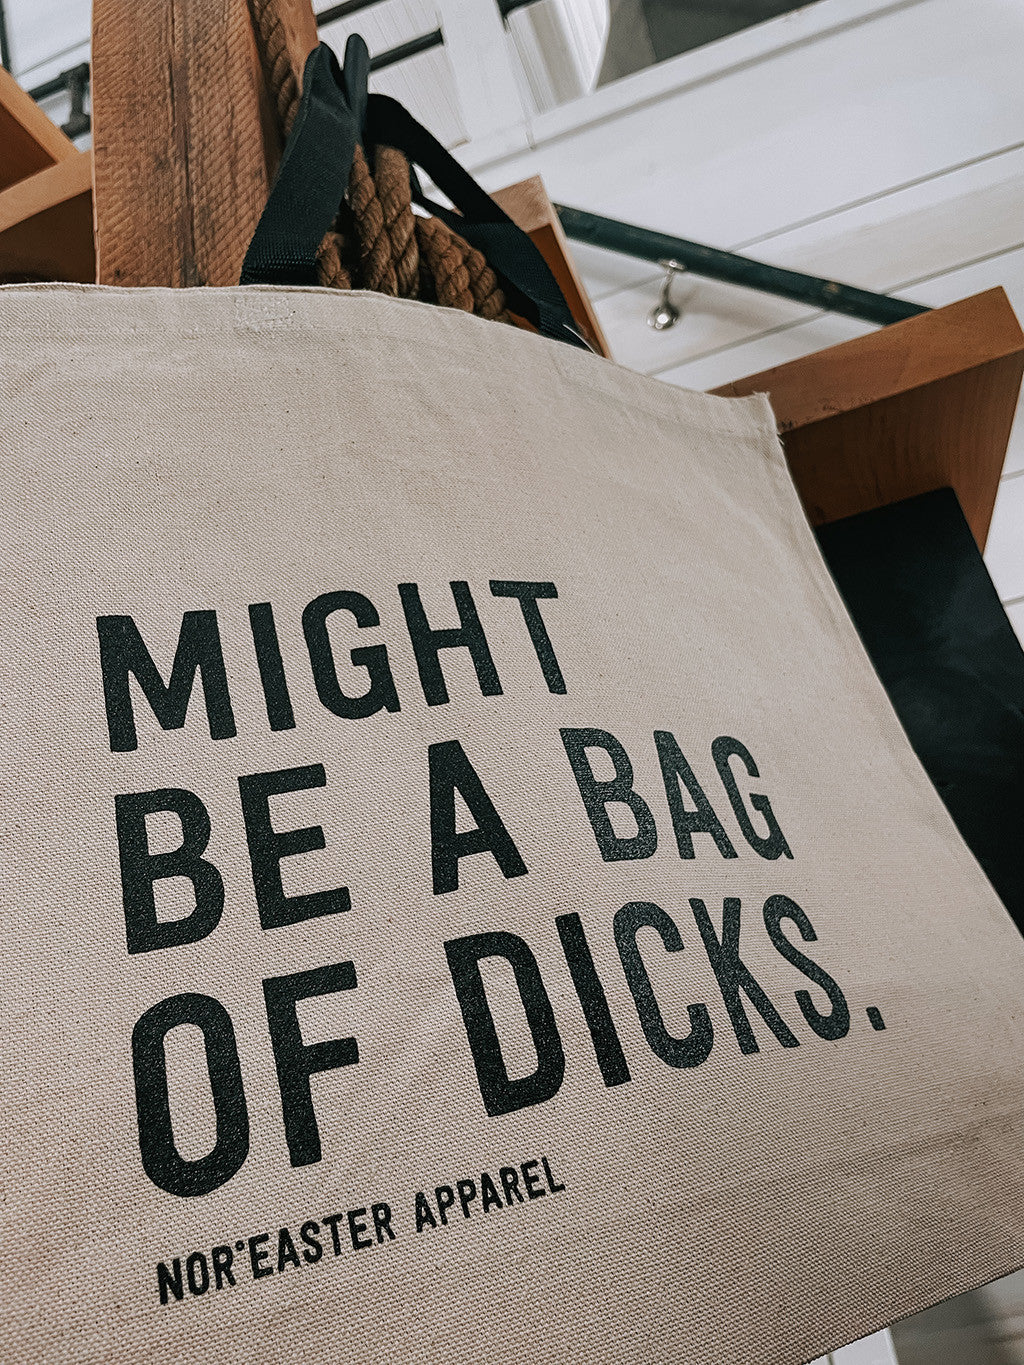 Bag of Dicks Reusable Tote Bag